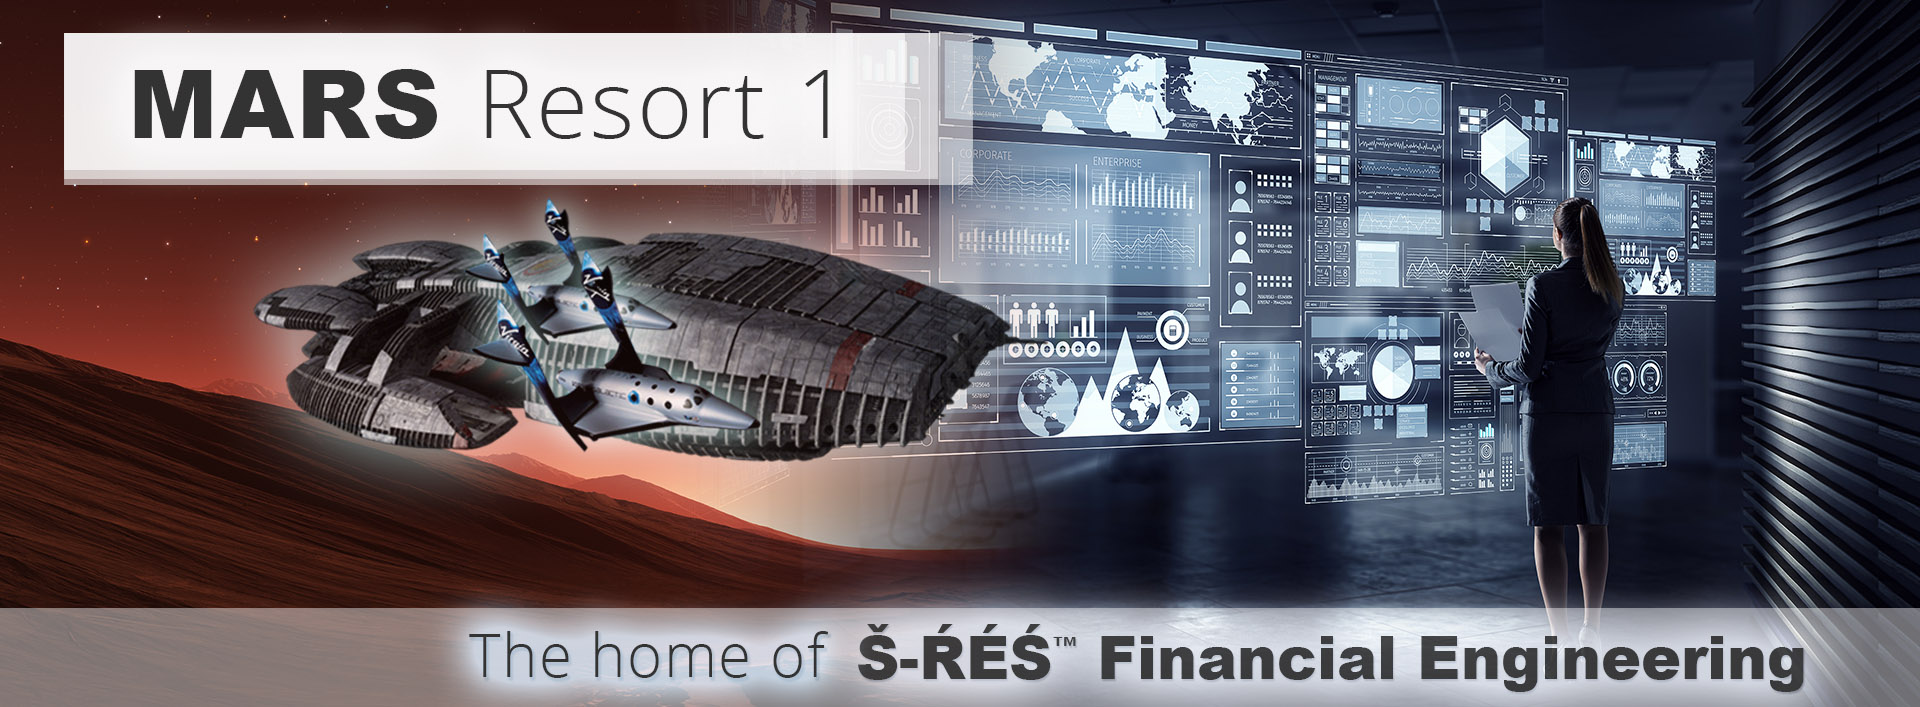 MARS-RESORT-1__The-home-of-Š-ŔÉŚ™-Financial-Engineering-2